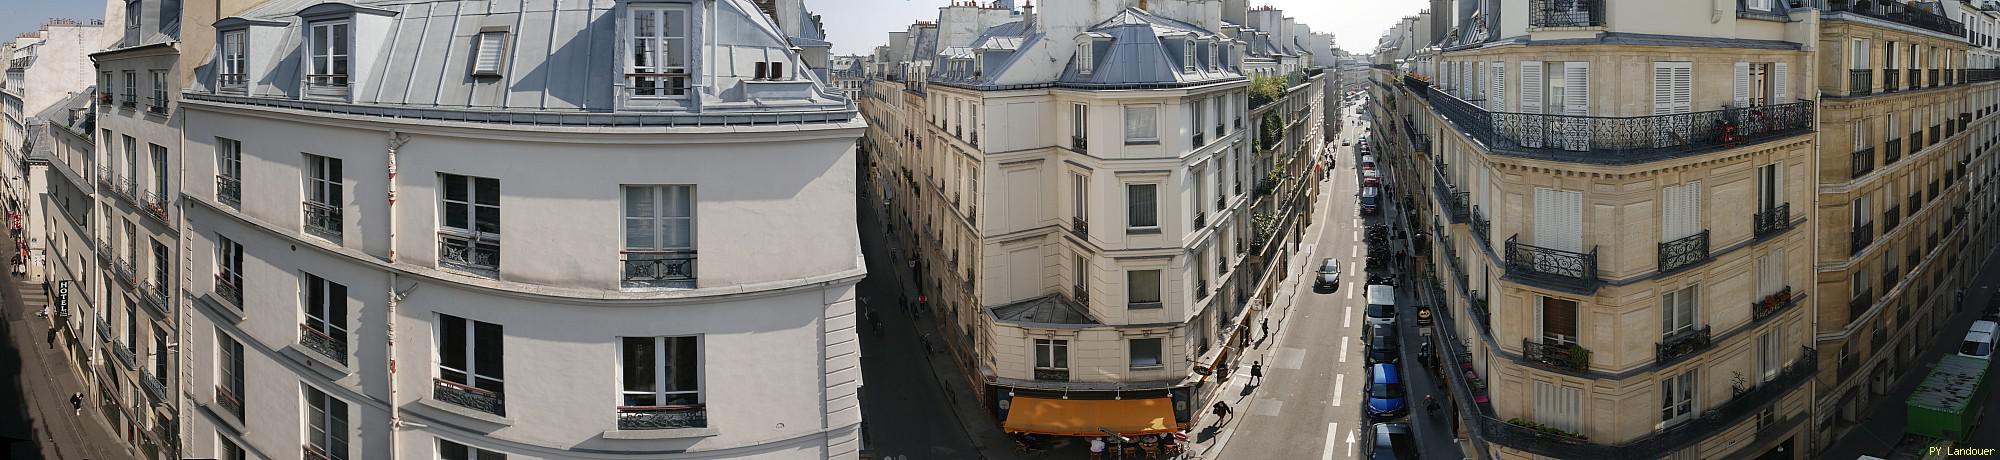 Paris vu d'en haut,  37bis rue Sainte-Anne